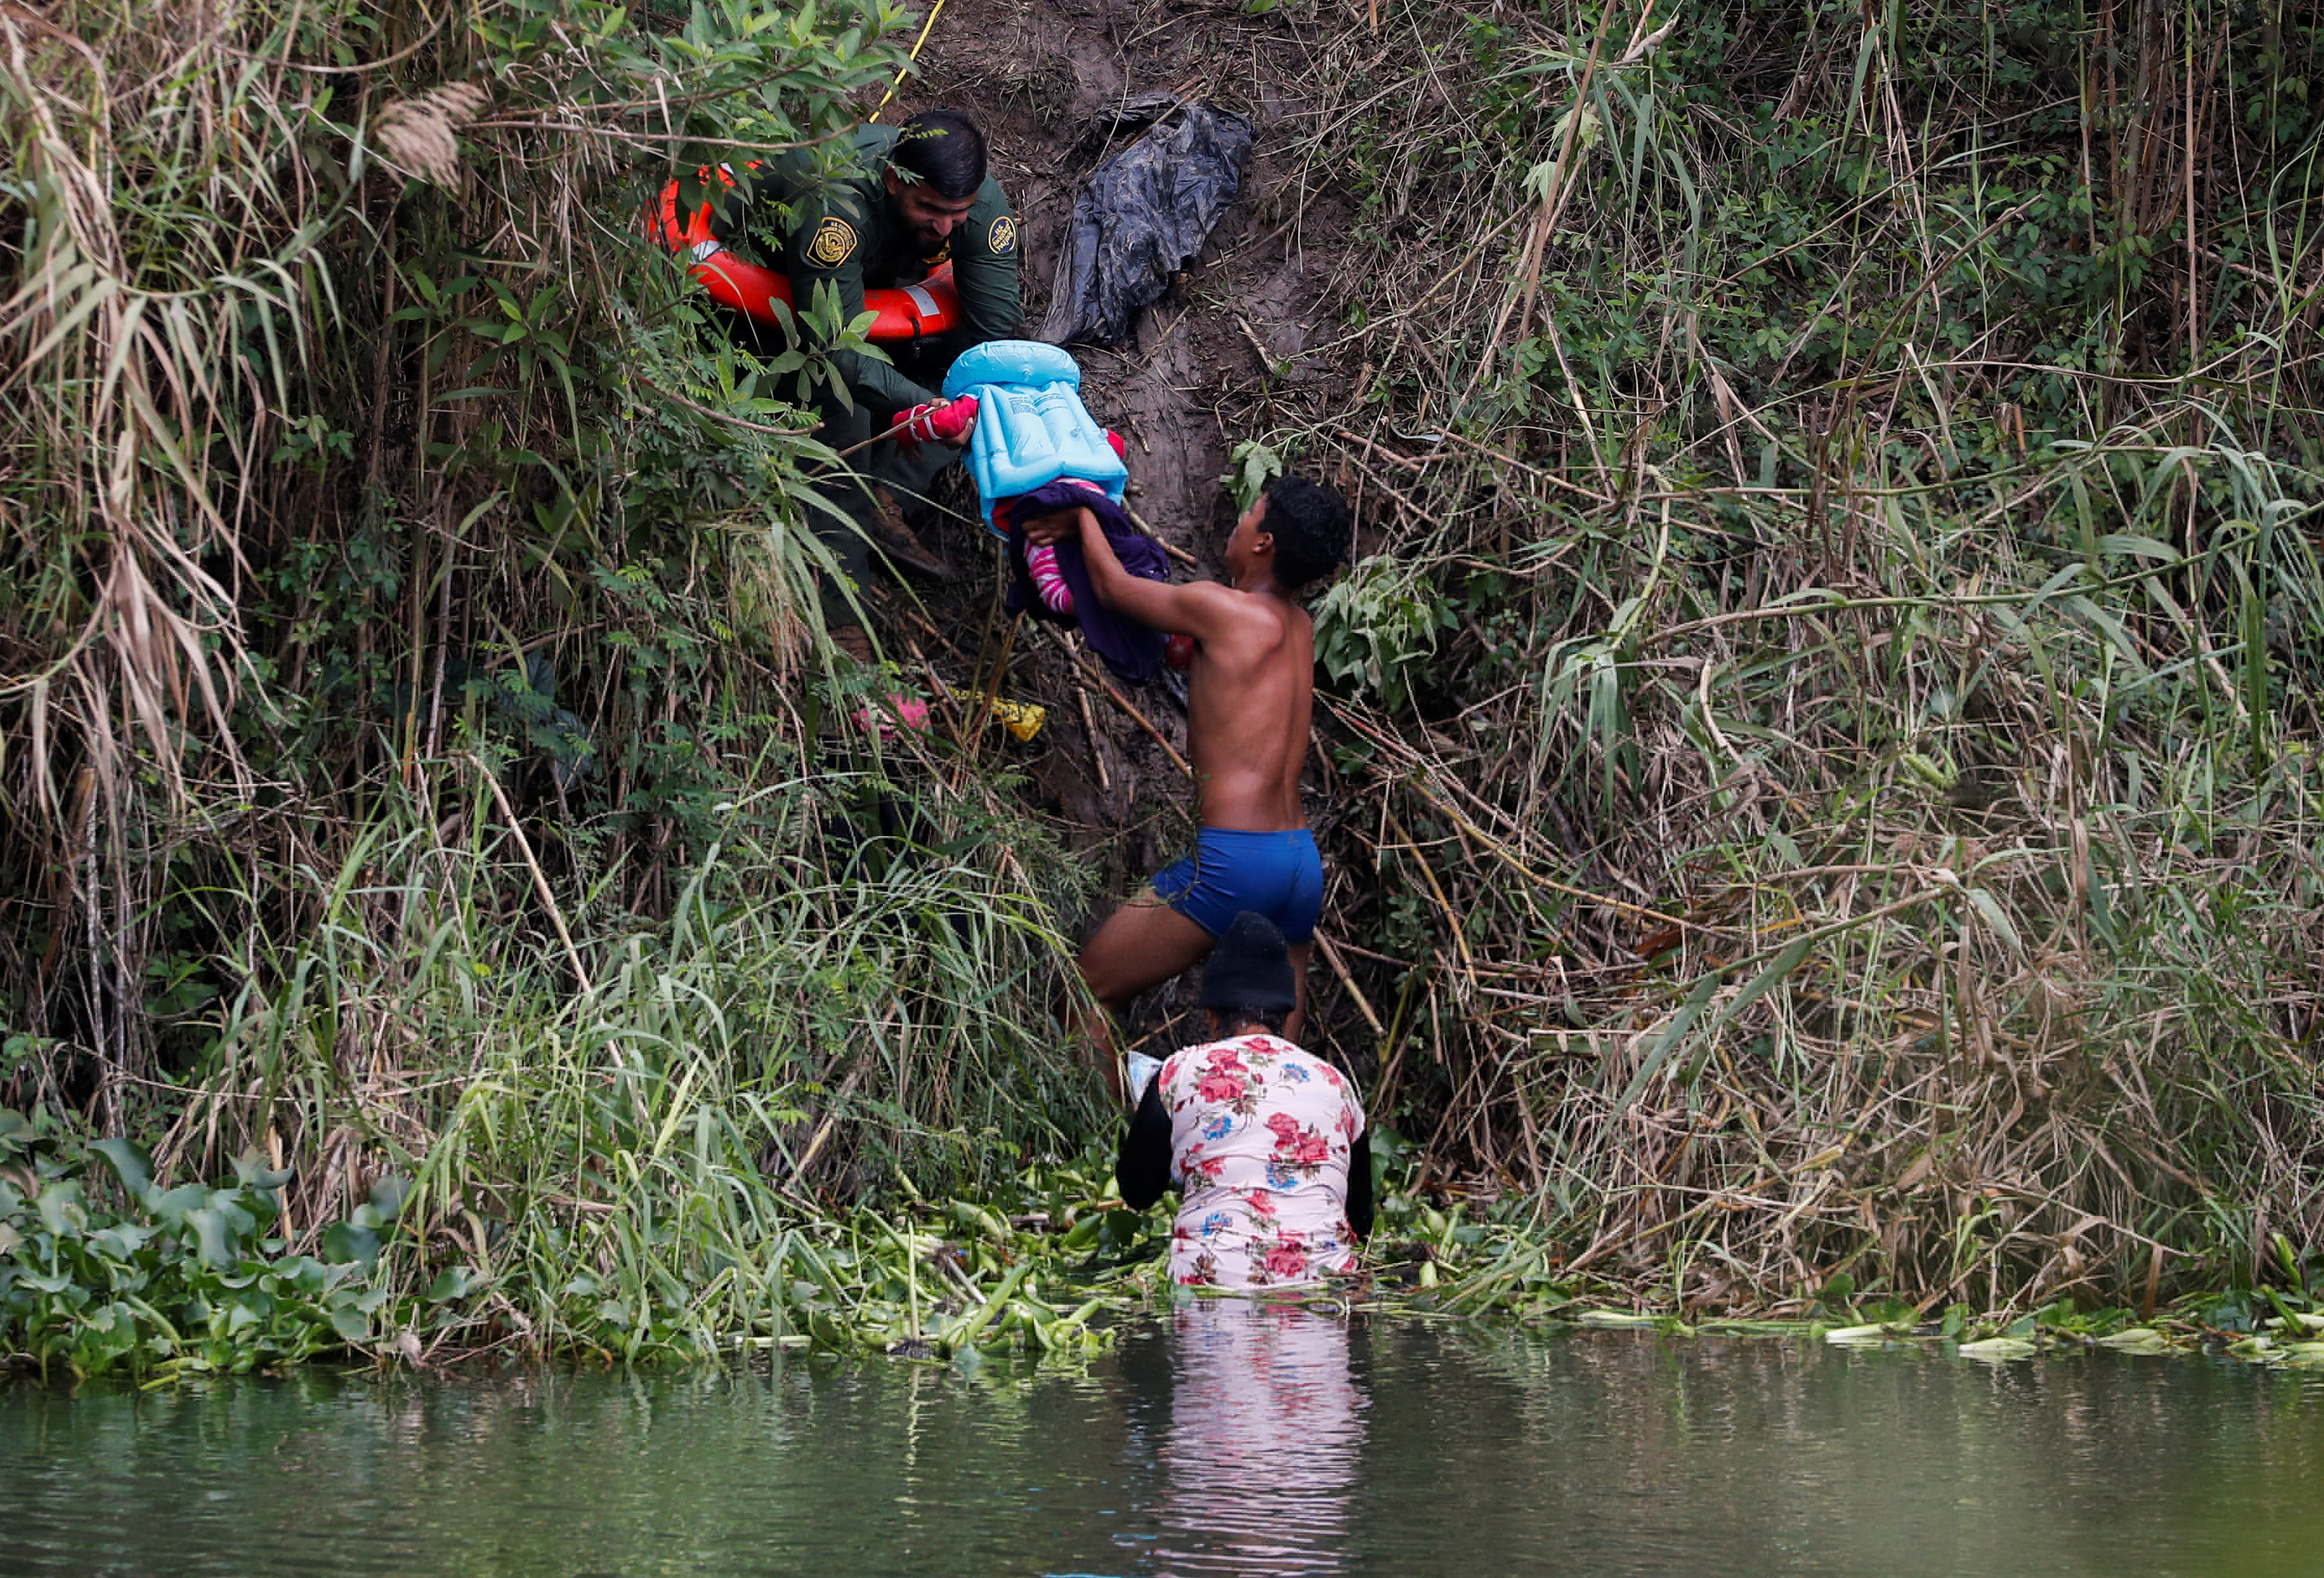 Migrants seeking asylum in the United States cross the Rio Bravo river, in Matamoros